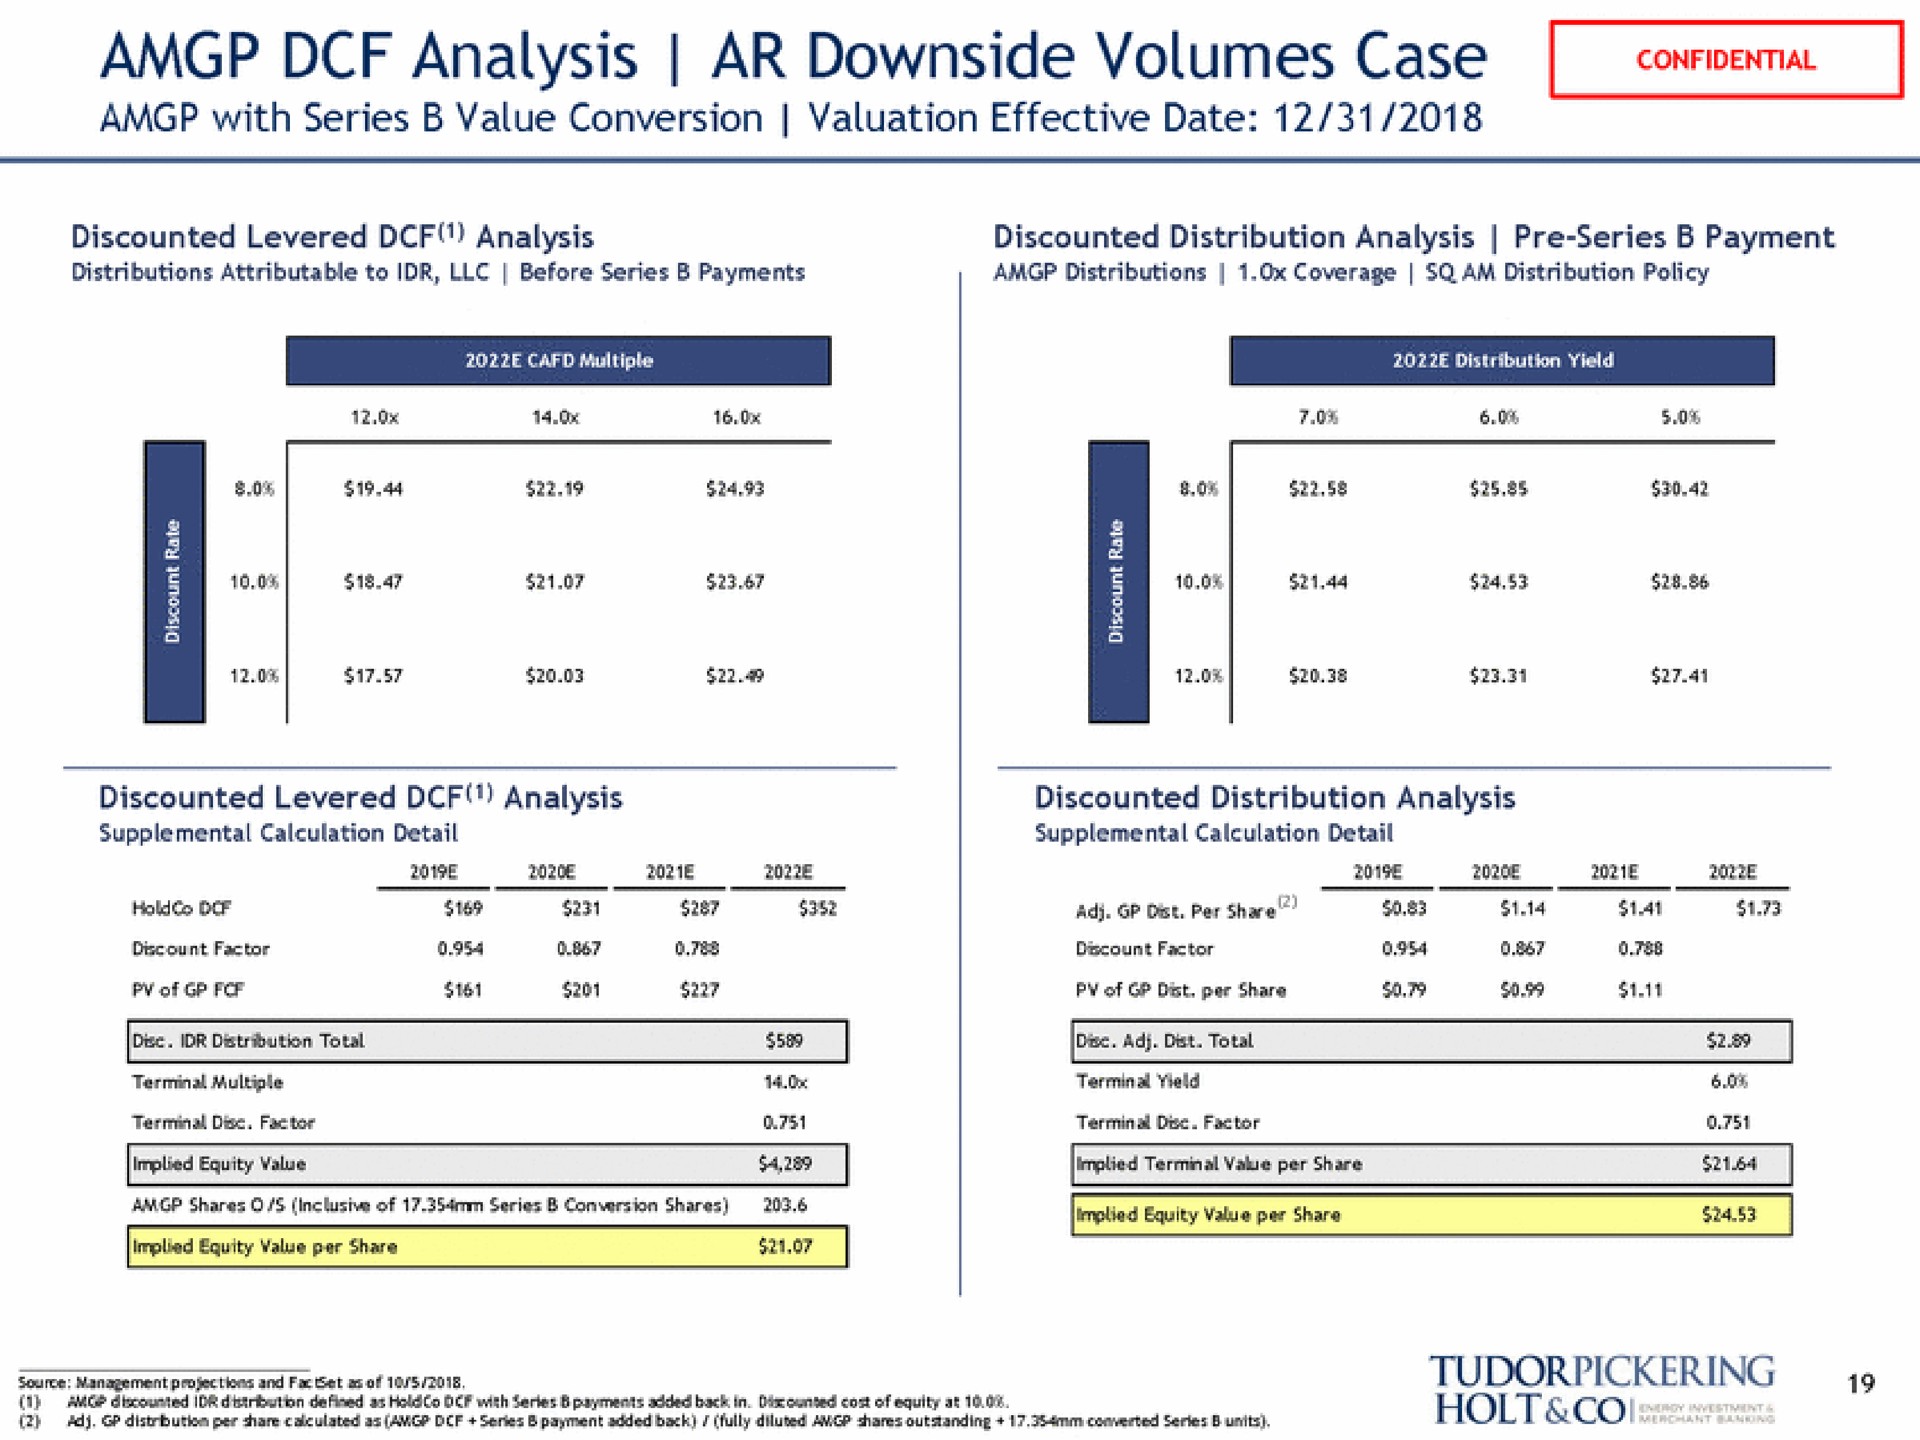 analysis downside volumes case | Tudor, Pickering, Holt & Co